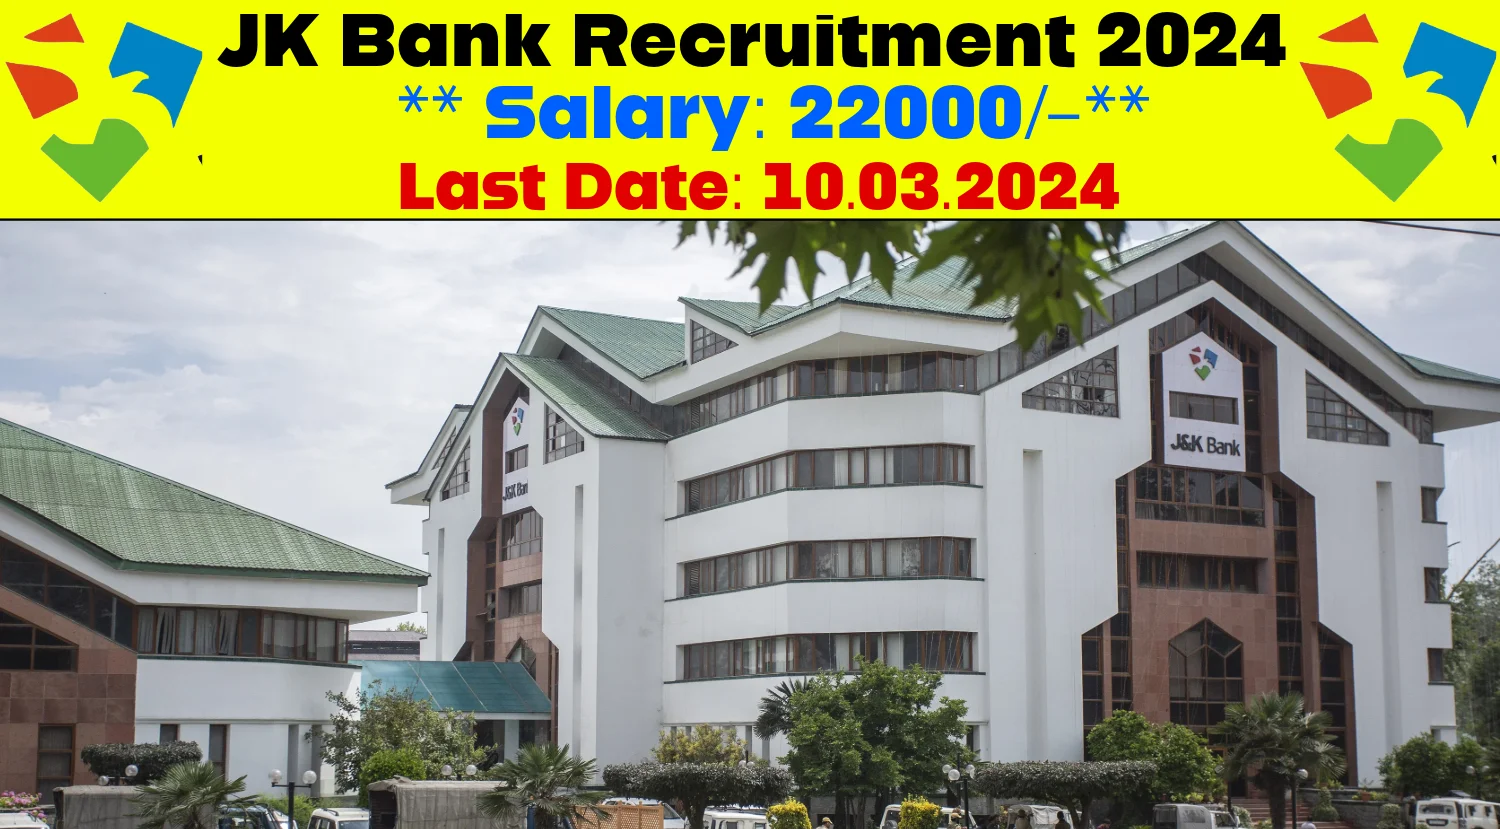 JK Bank Recruitment 2024 Notification Out, Check Details